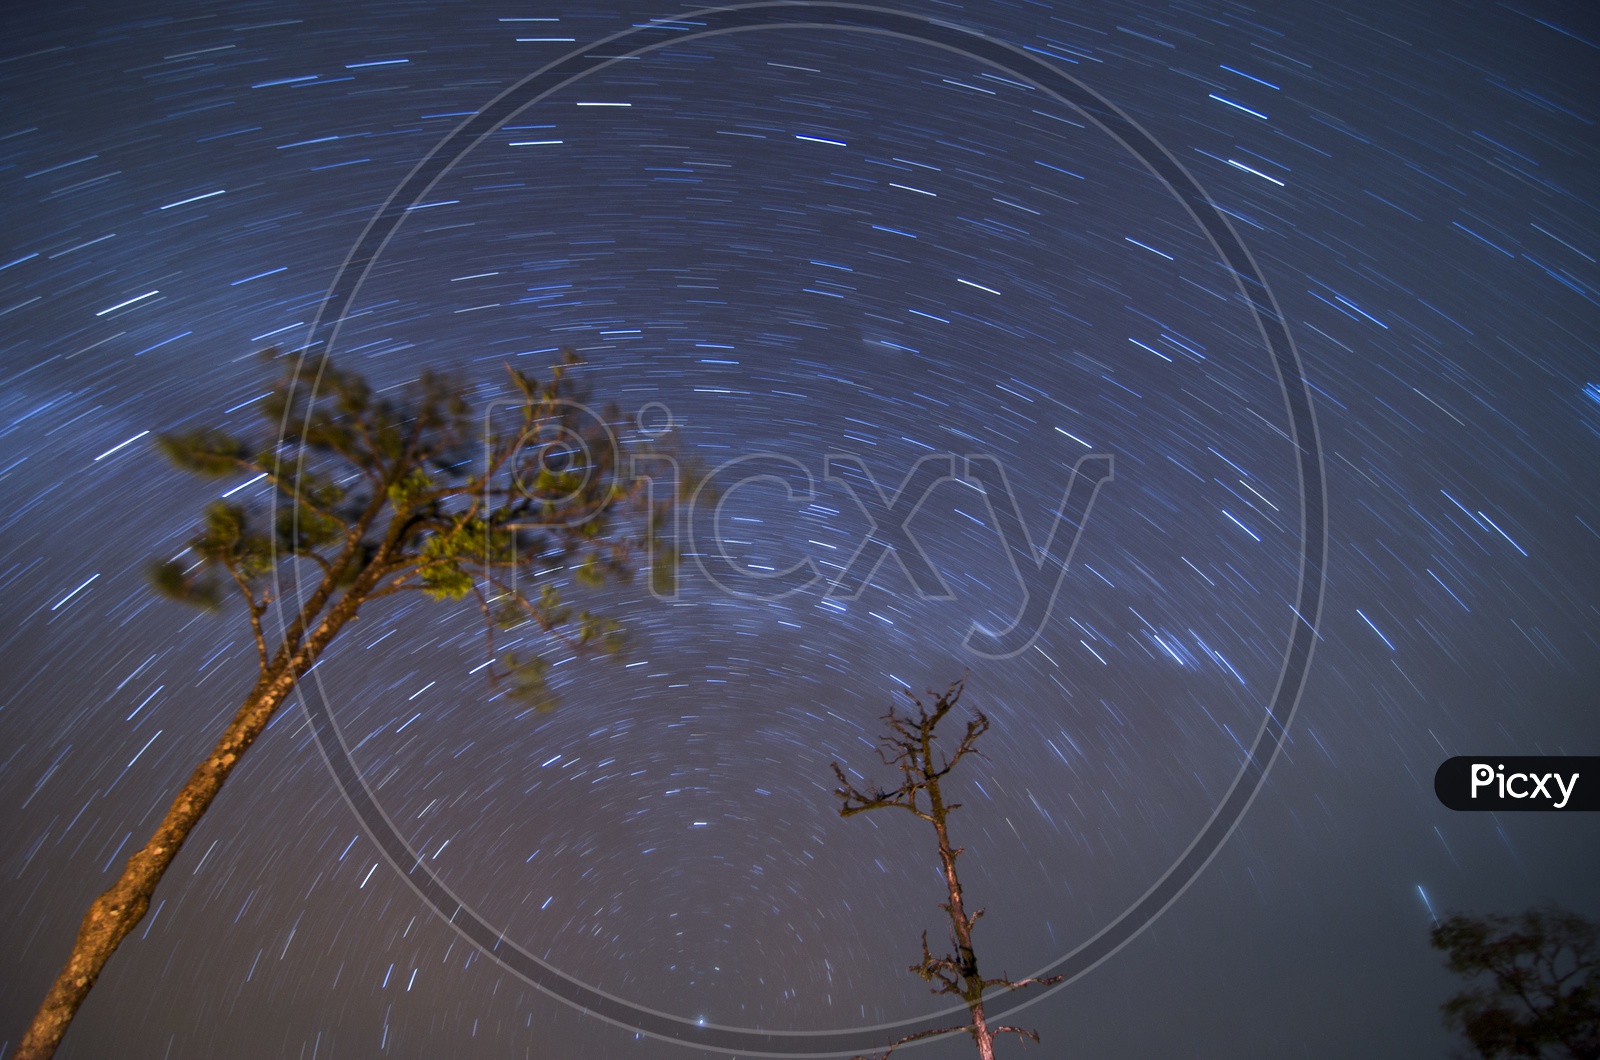 Star Gazing or Sacking Over Mountain, Khao chang puak, Thailand